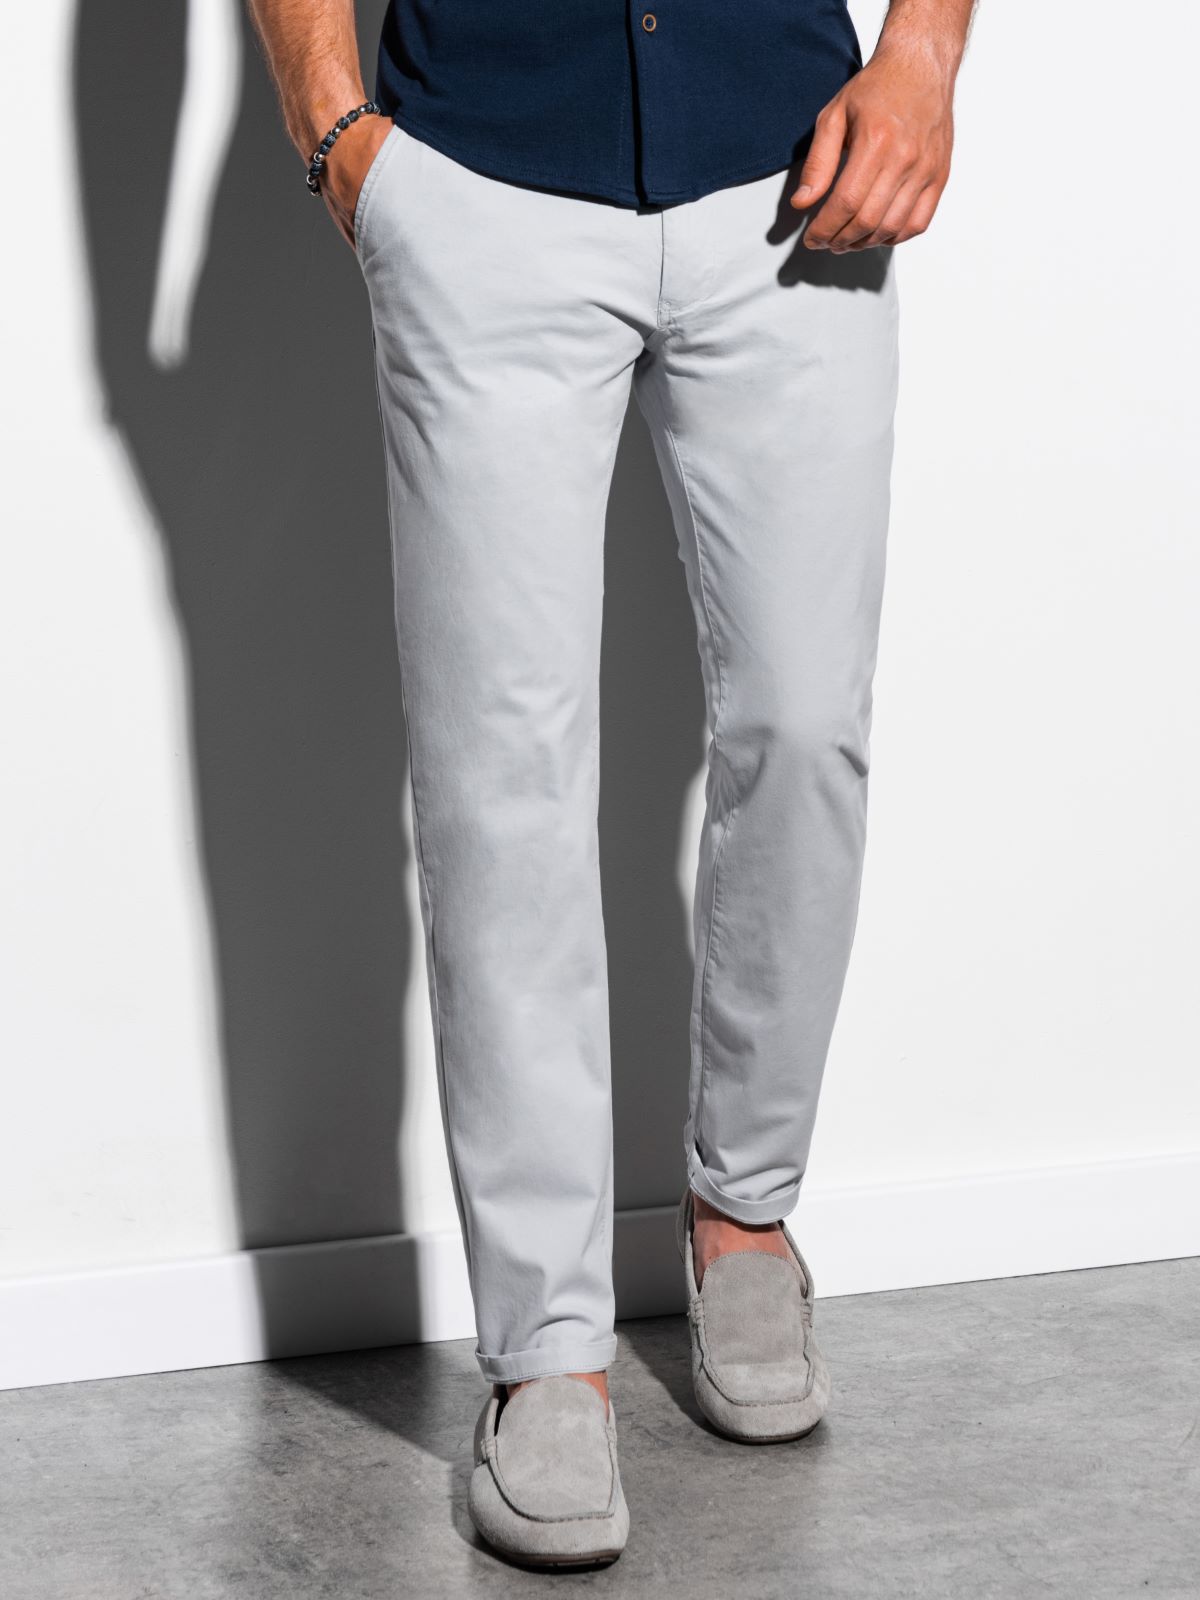 Men's pants chinos P894 - light grey | MODONE wholesale - Clothing For Men